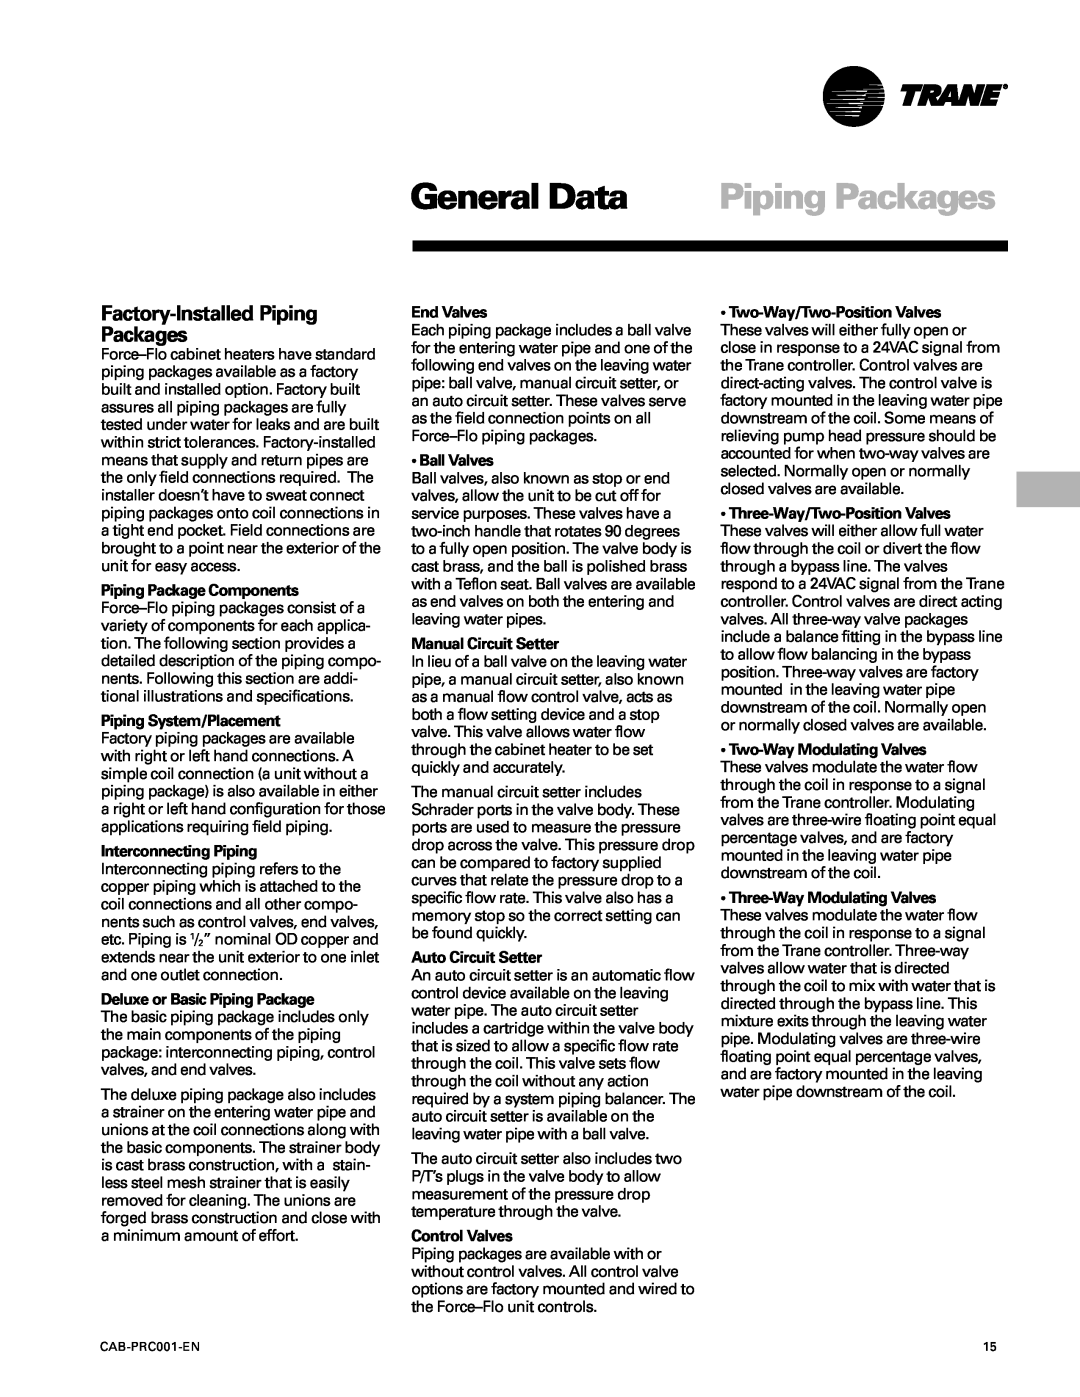 Trane CAB-PRC001-EN manual General Data, Factory-InstalledPiping Packages 